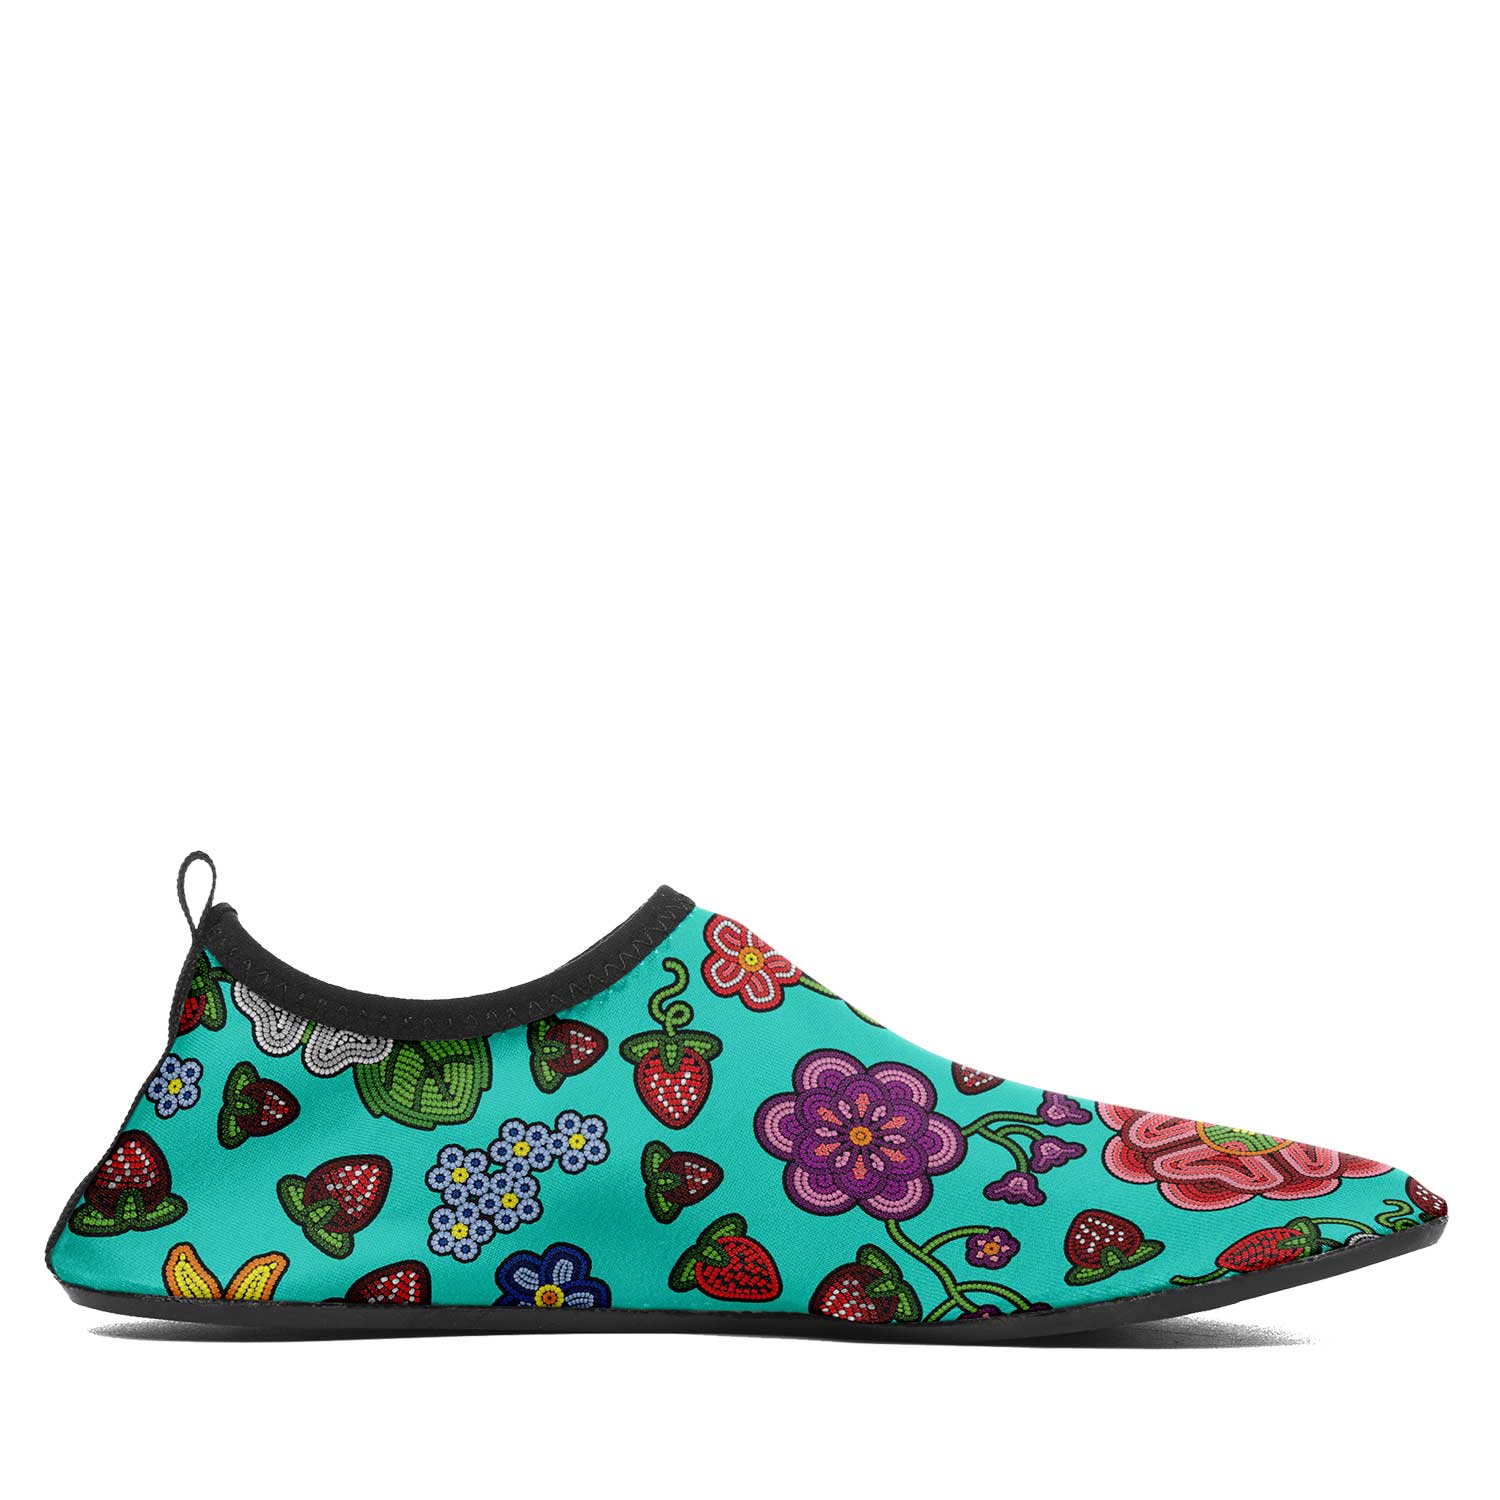 Berry Pop Turquoise Kid's Sockamoccs Slip On Shoes